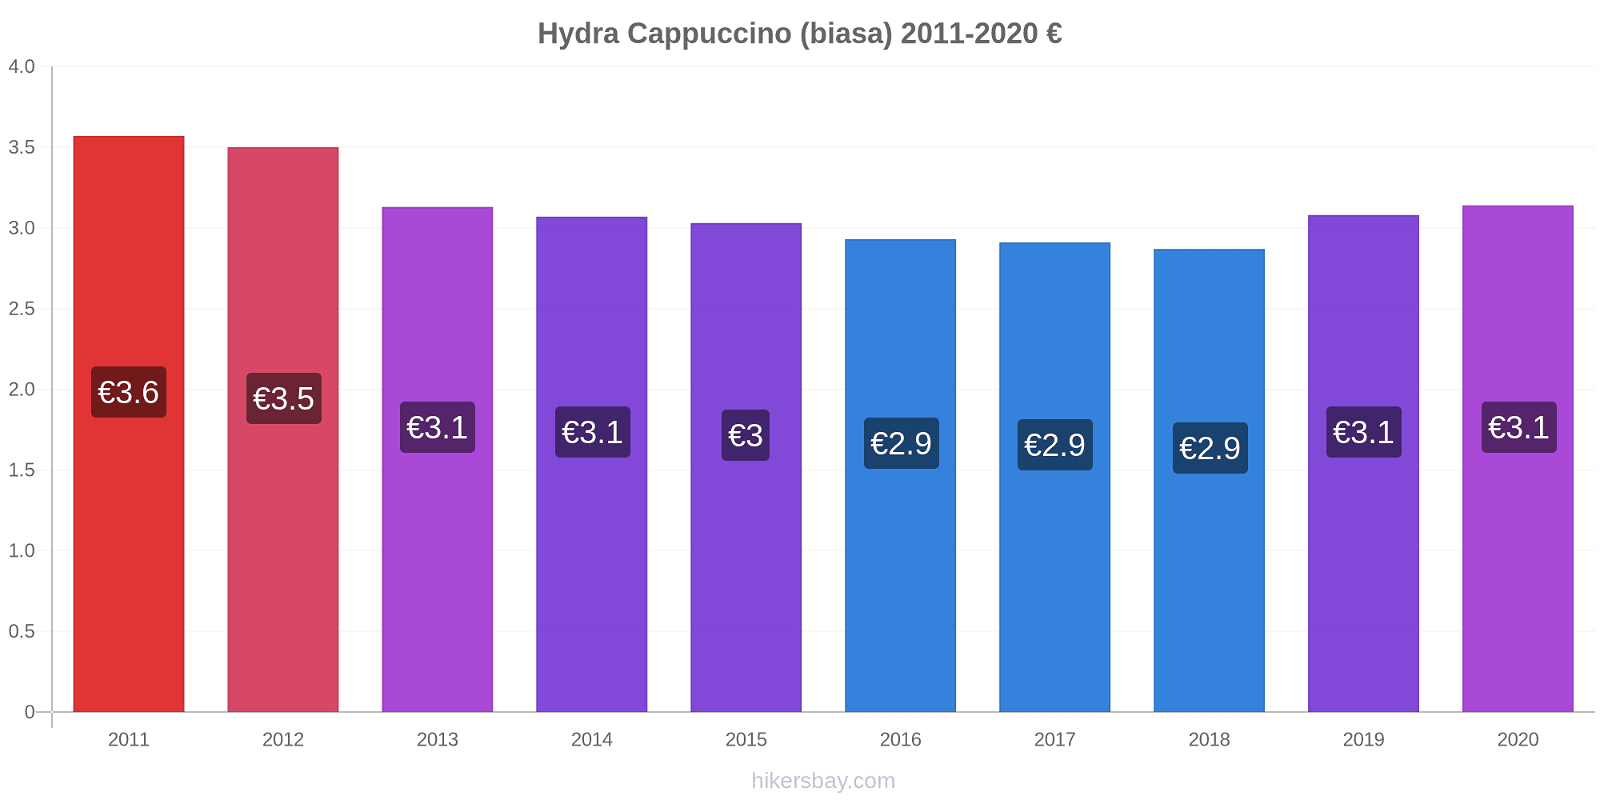 Hydra perubahan harga Cappuccino (biasa) hikersbay.com